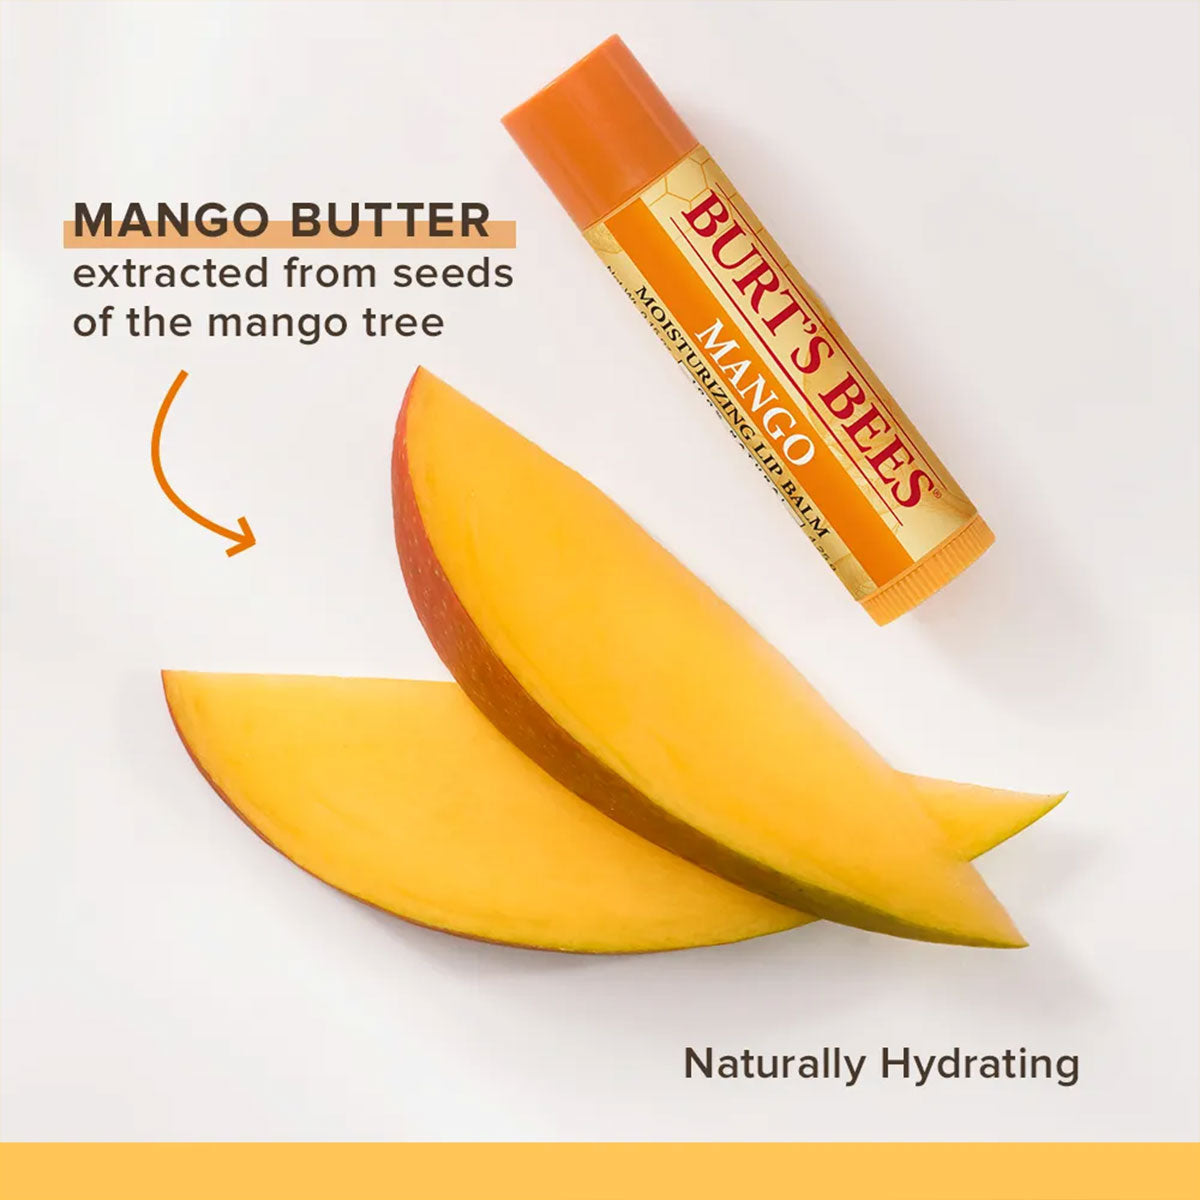 Bálsamo labial Blister Mango Burt’s Bees 4 gr - 🐝🍃 producto 100% natural